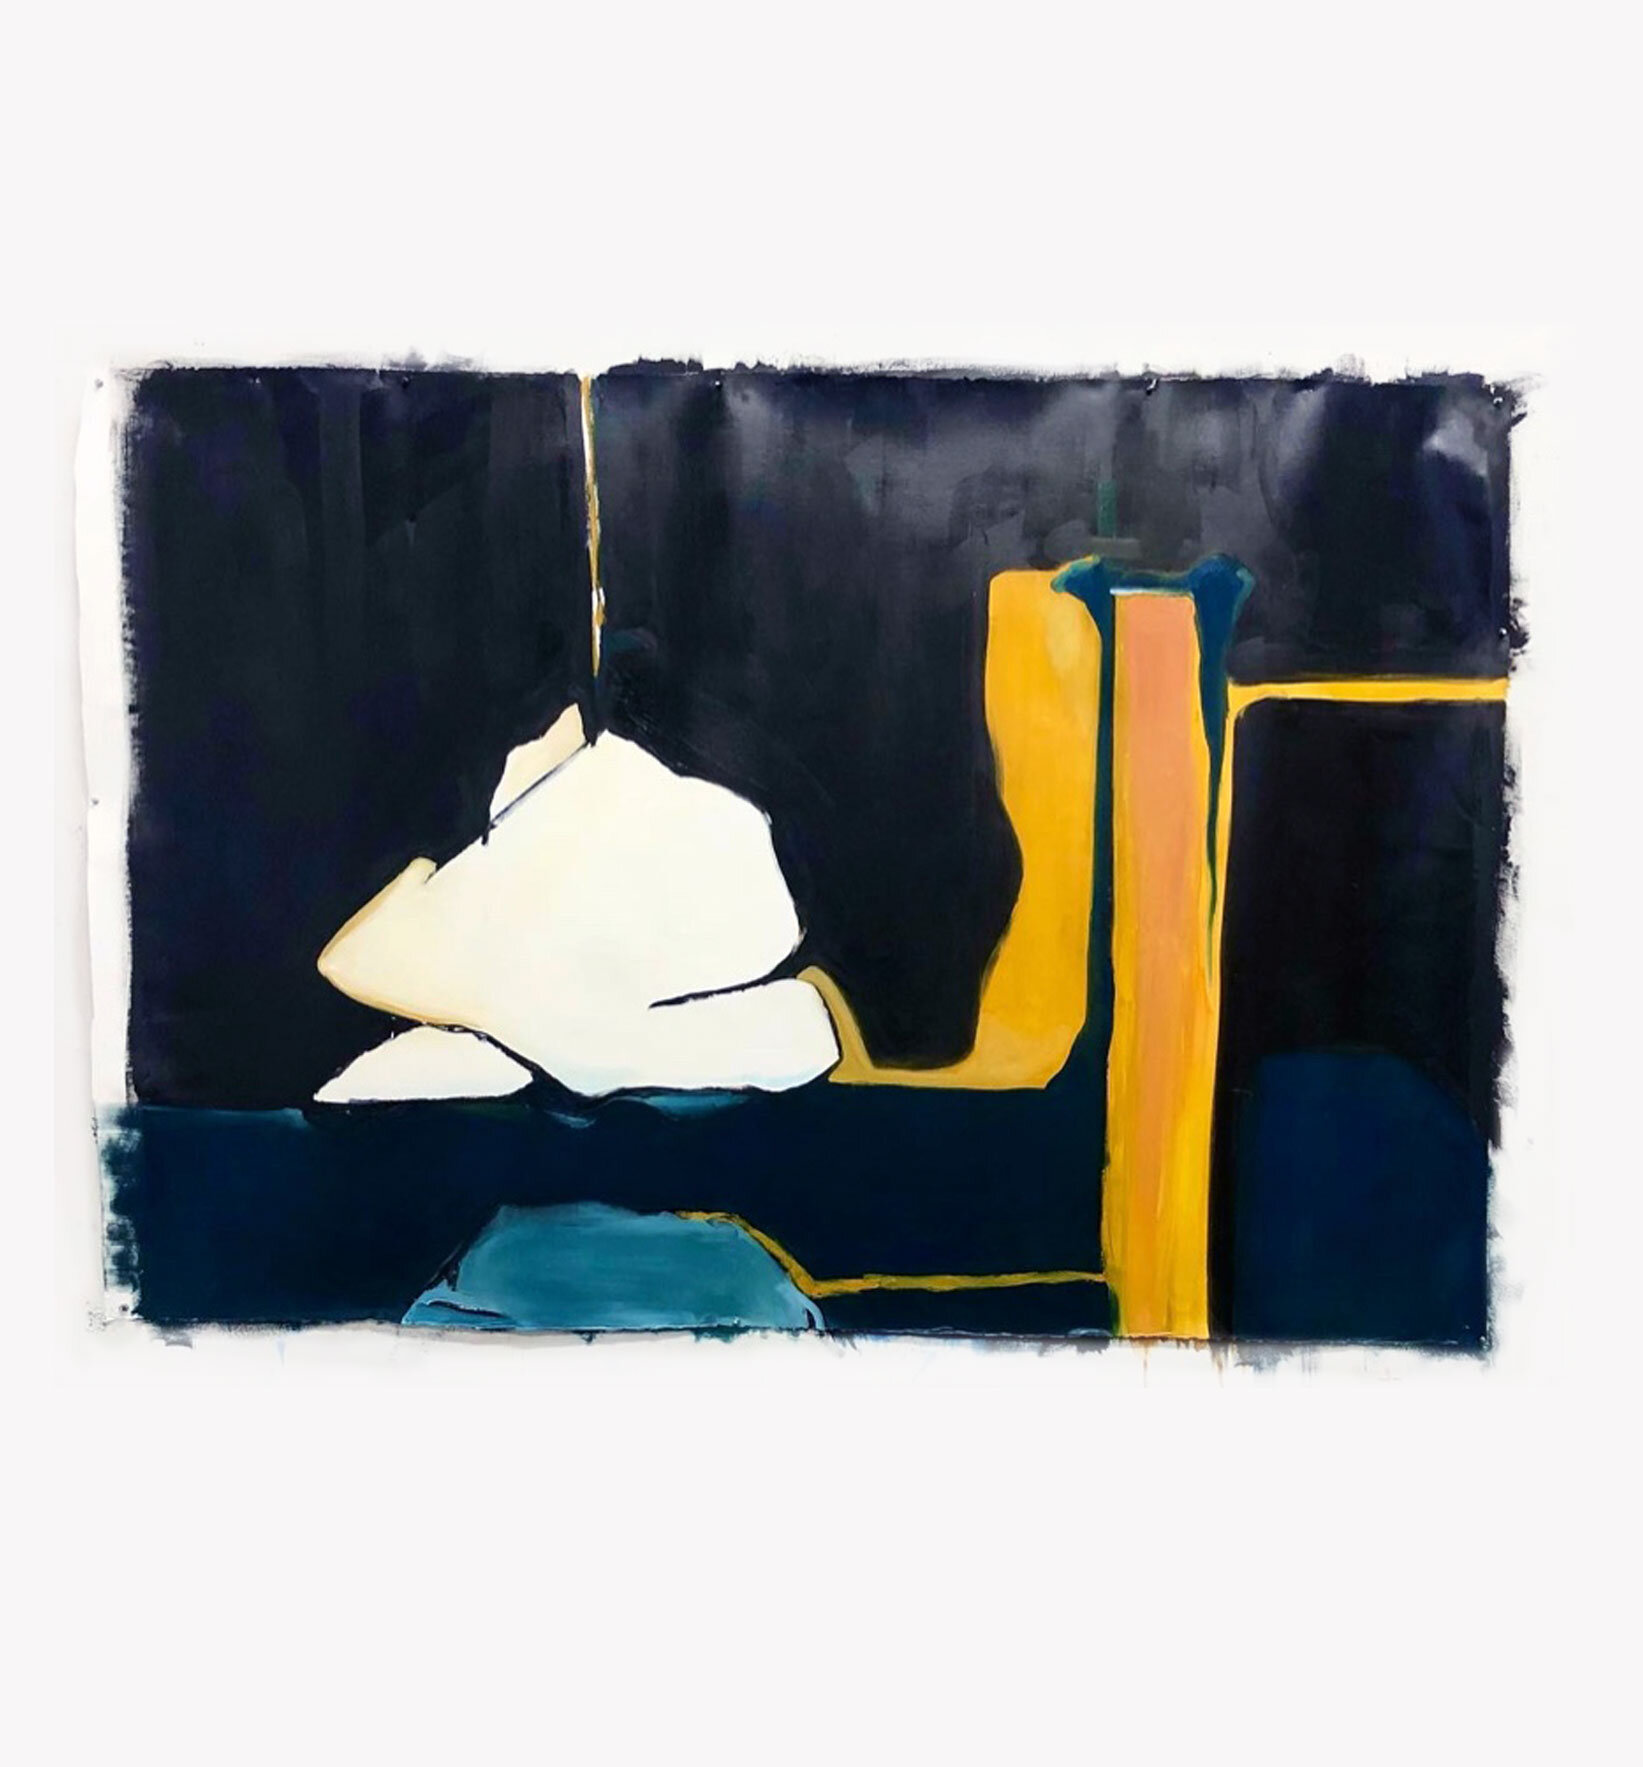   Narcissus , Kristi Head 2020. Oil on paper, 52 x 70 inches. 